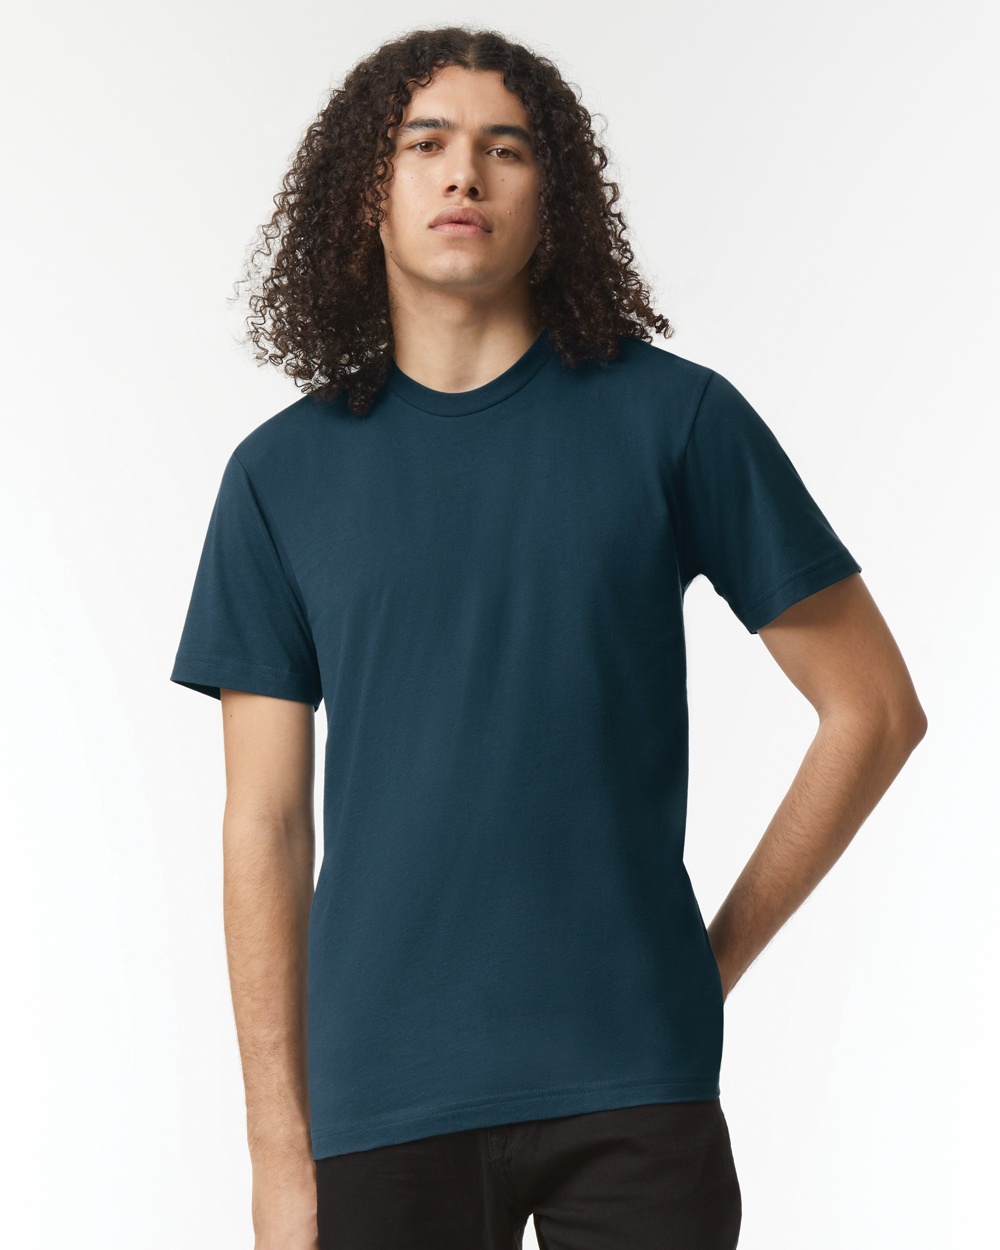 American Apparel 2007 Long Sleeve Shirt Size Chart, Unisex Long